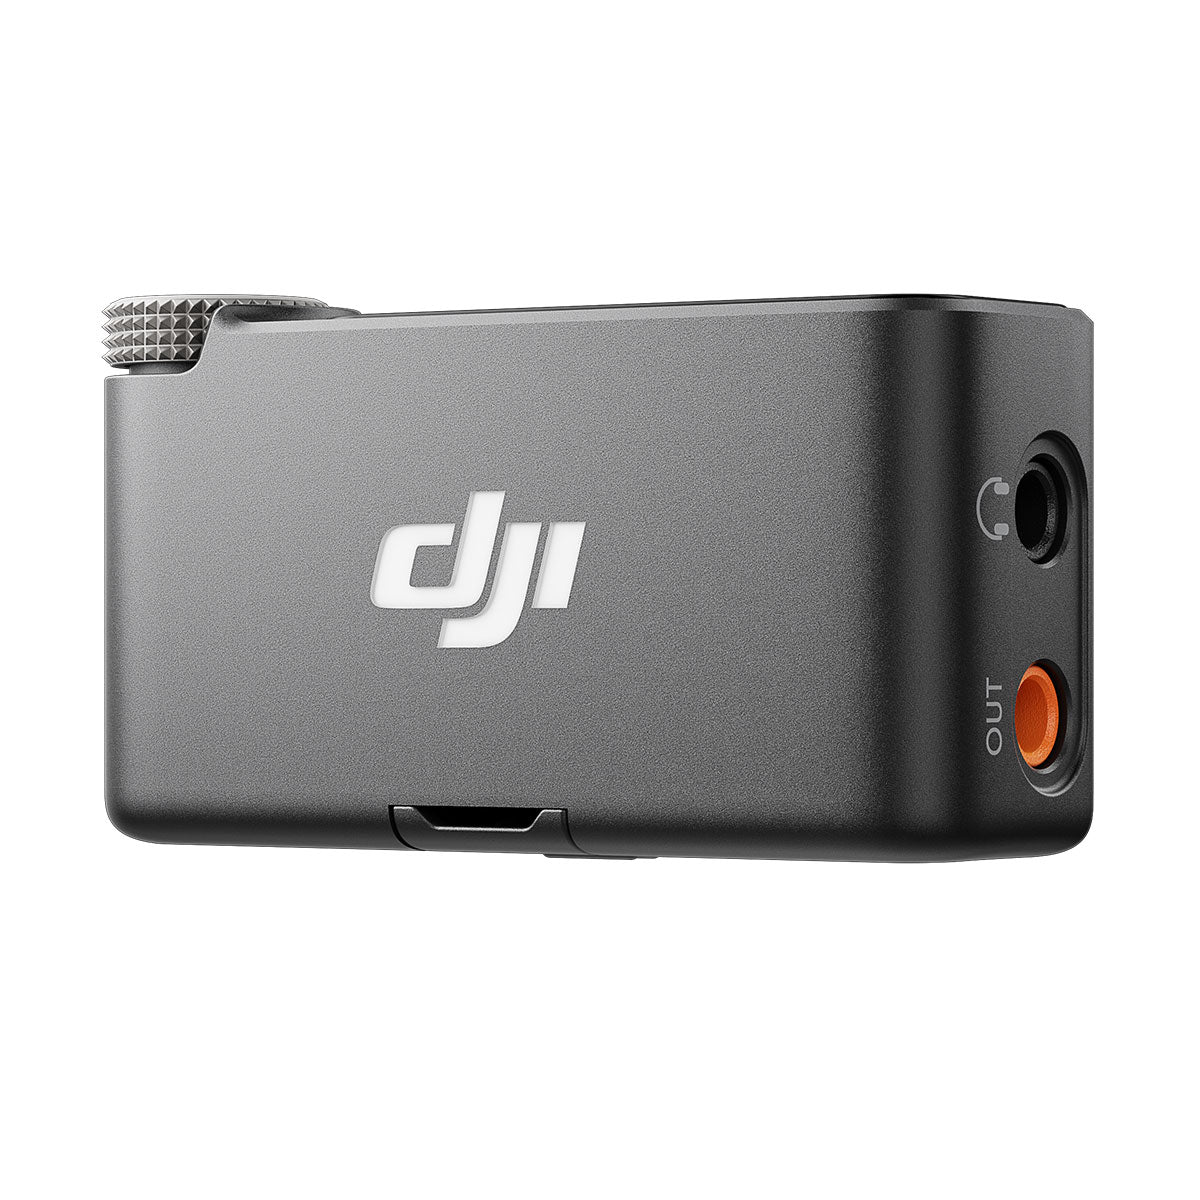 Microfono Digital Wireless DJI Mic 2 Transmitter (Pearl White)